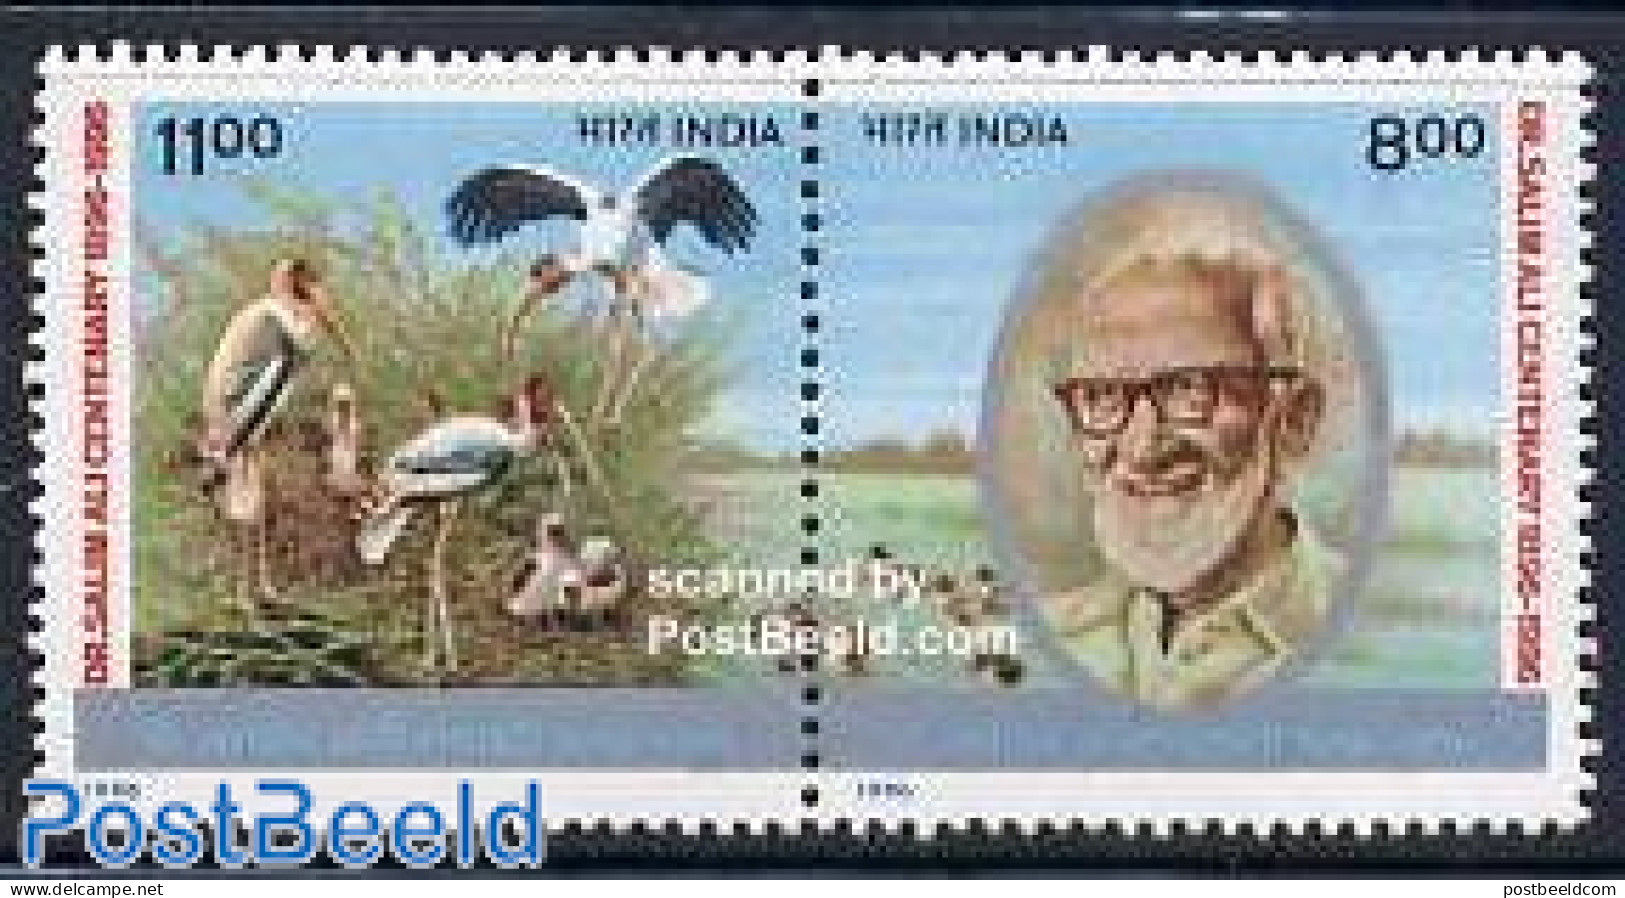 India 1996 S.M.A. Ali 2v [:], Mint NH, Nature - Birds - Nuovi